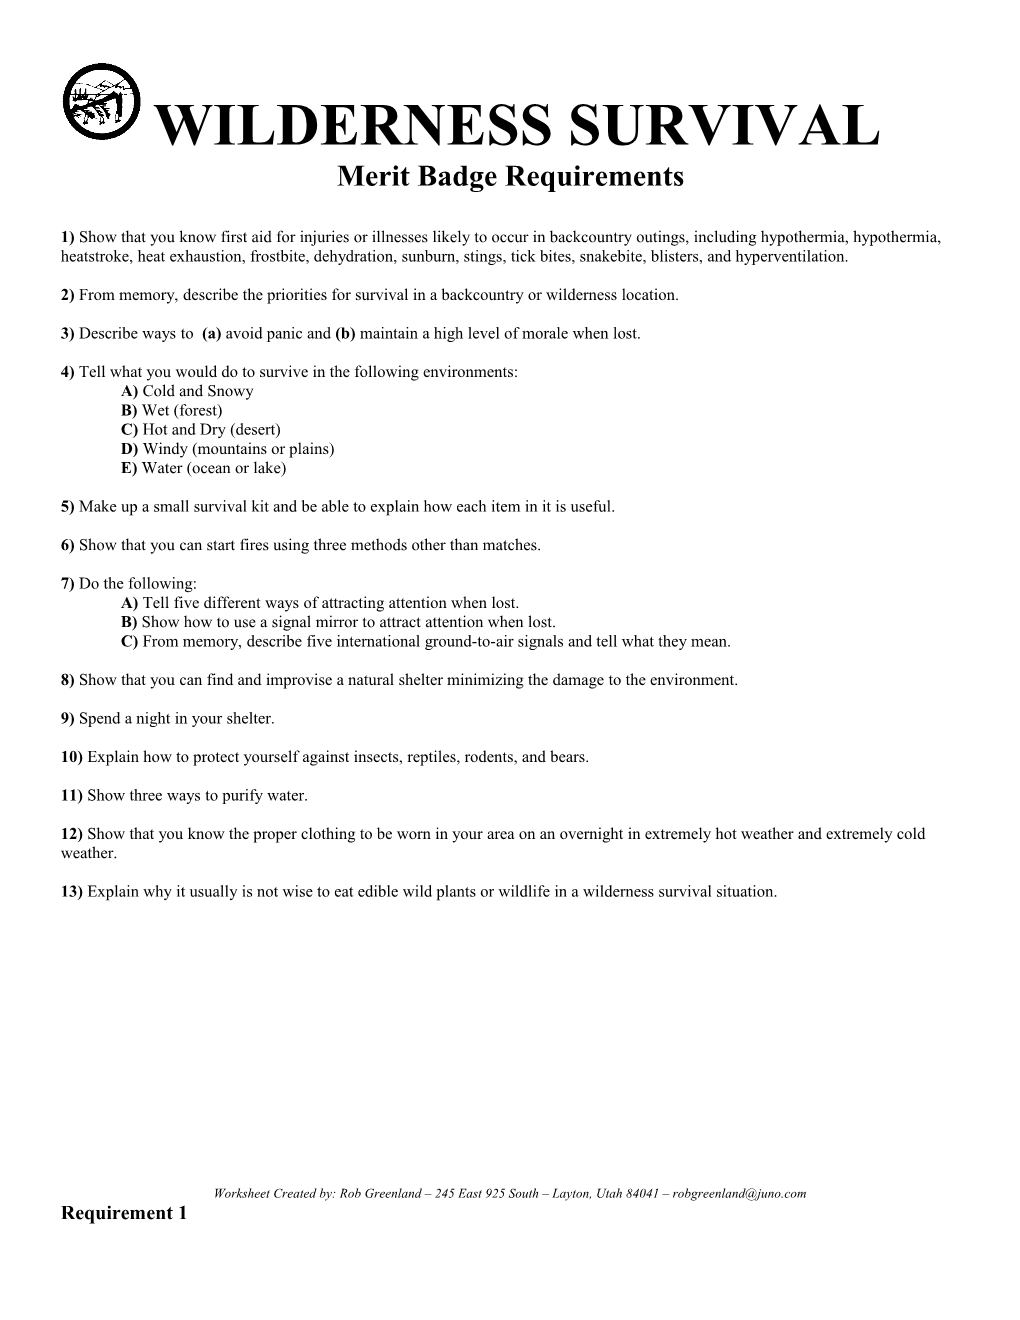 Merit Badge Requirements s2